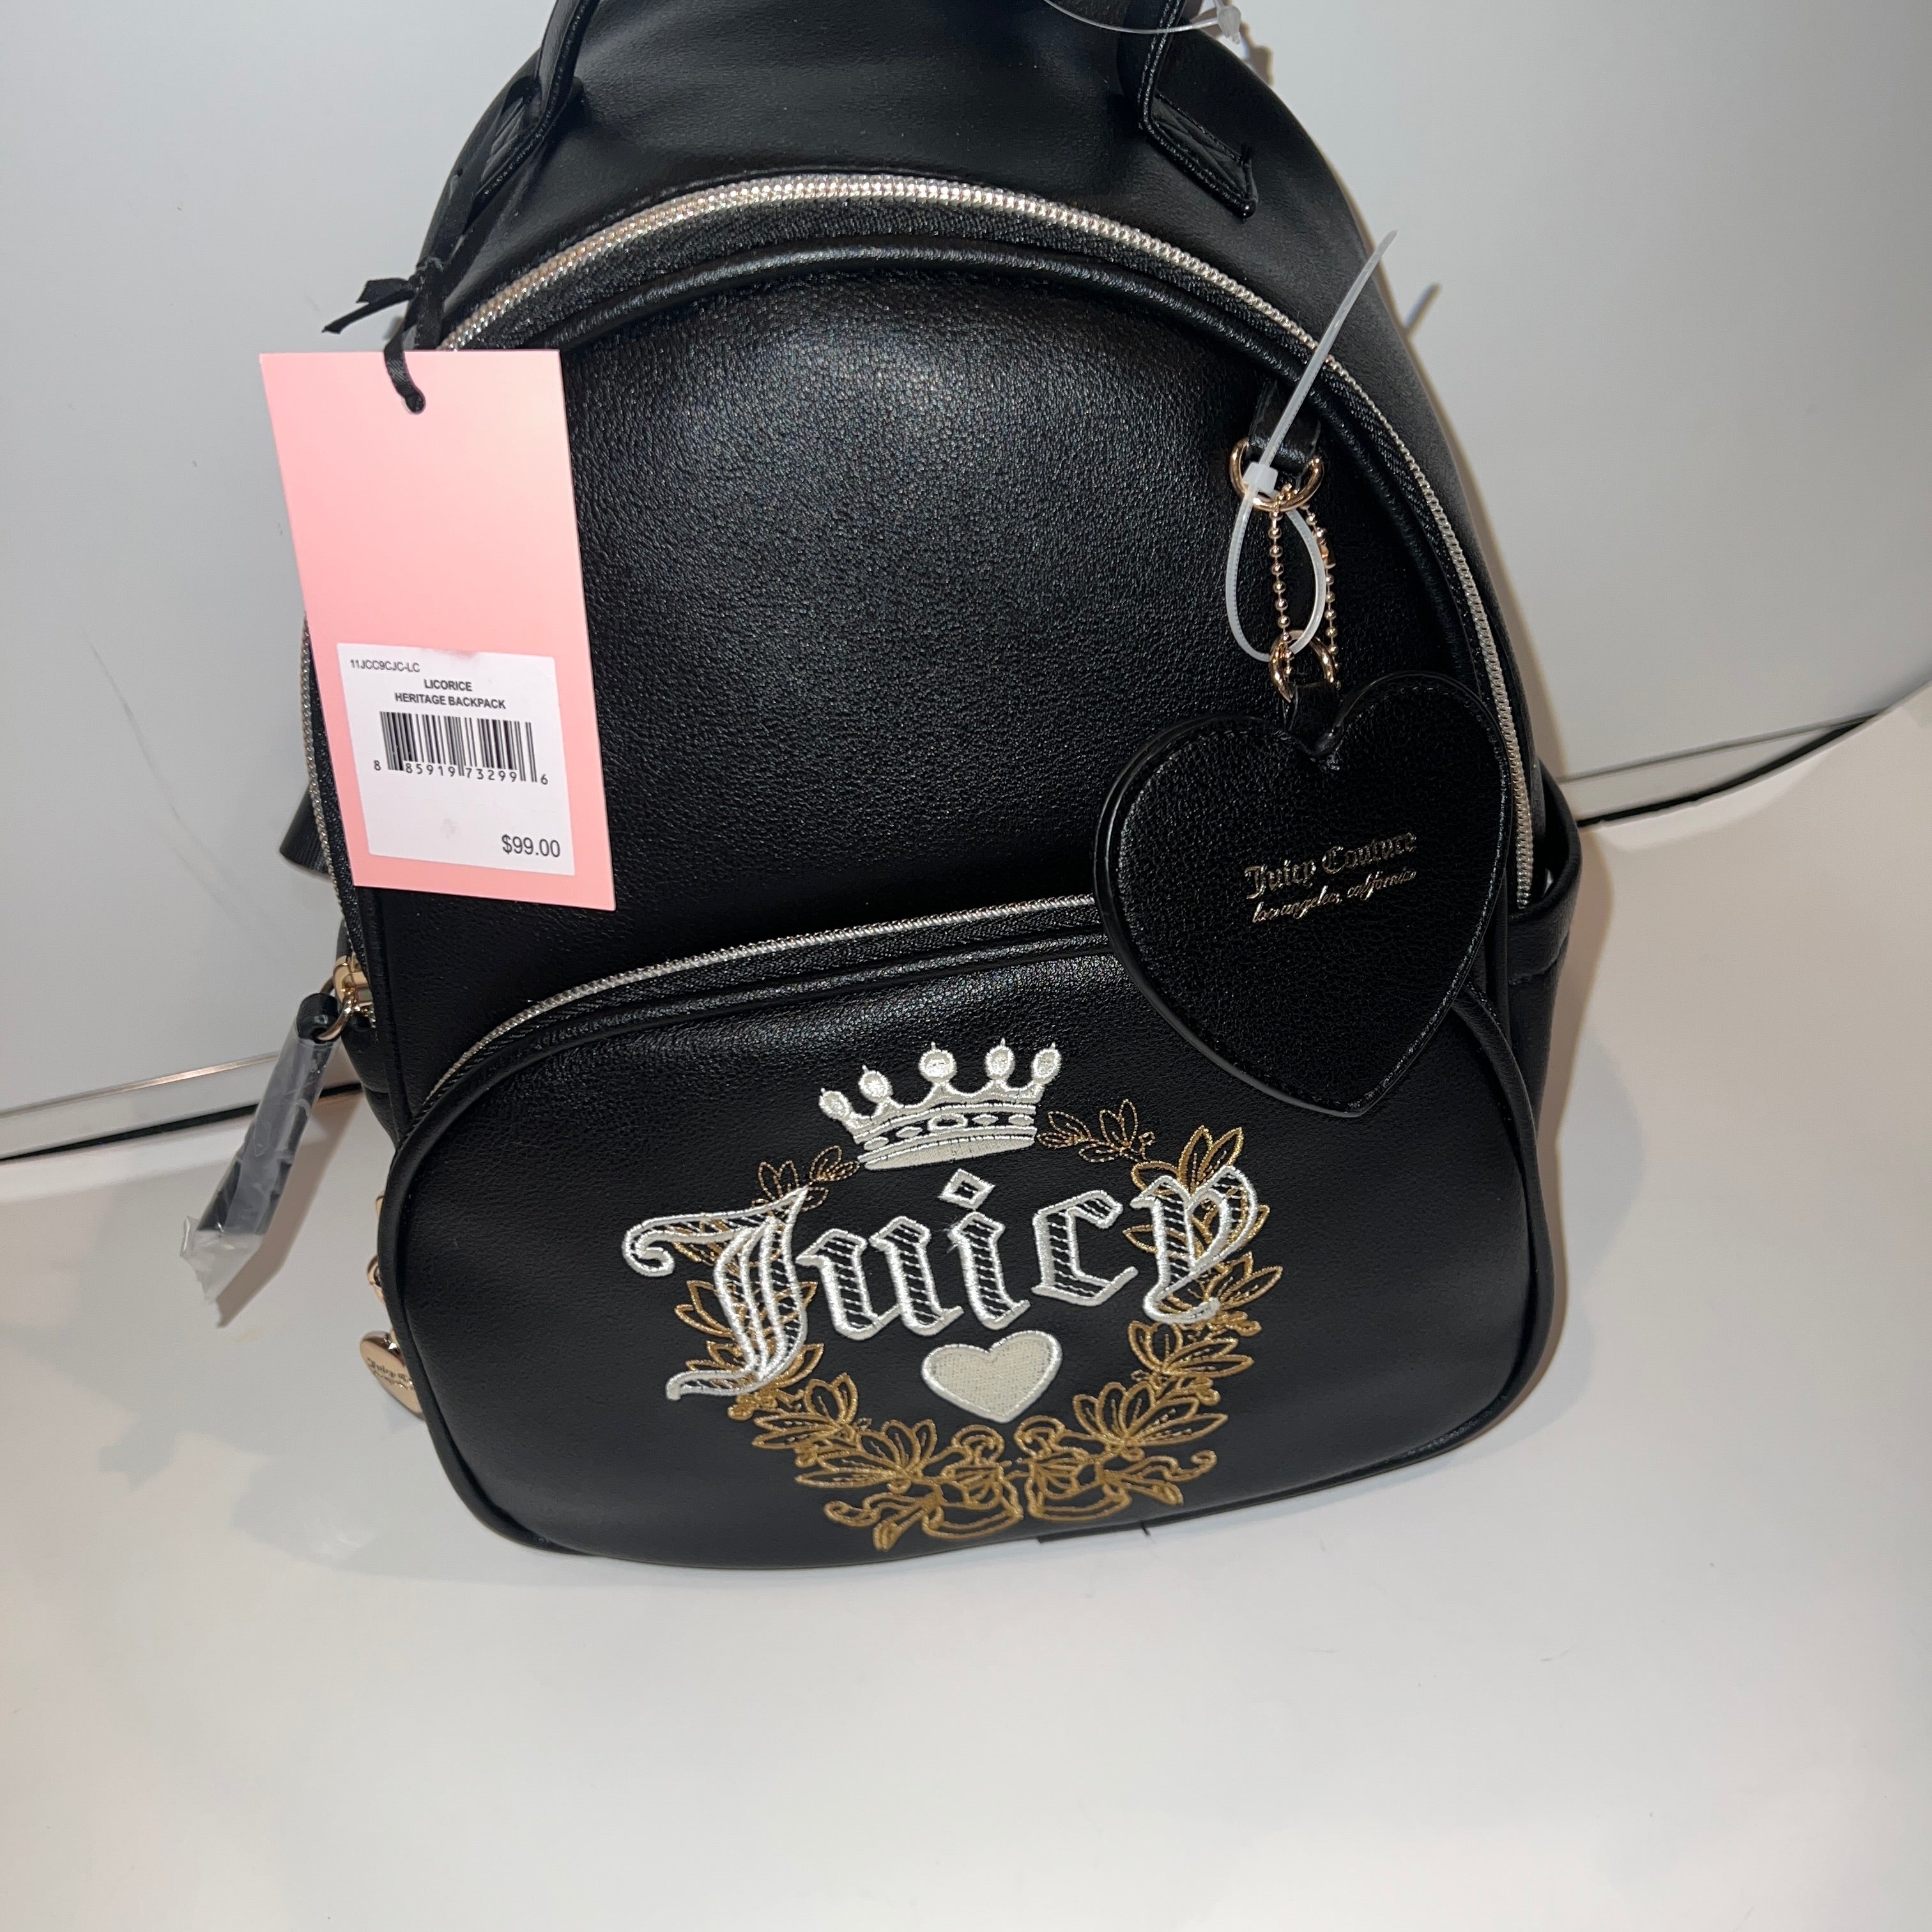 Juicy Couture Mini Backpack and Wallet | Juicy couture purse pink, Juicy  couture bags, Juicy couture handbags